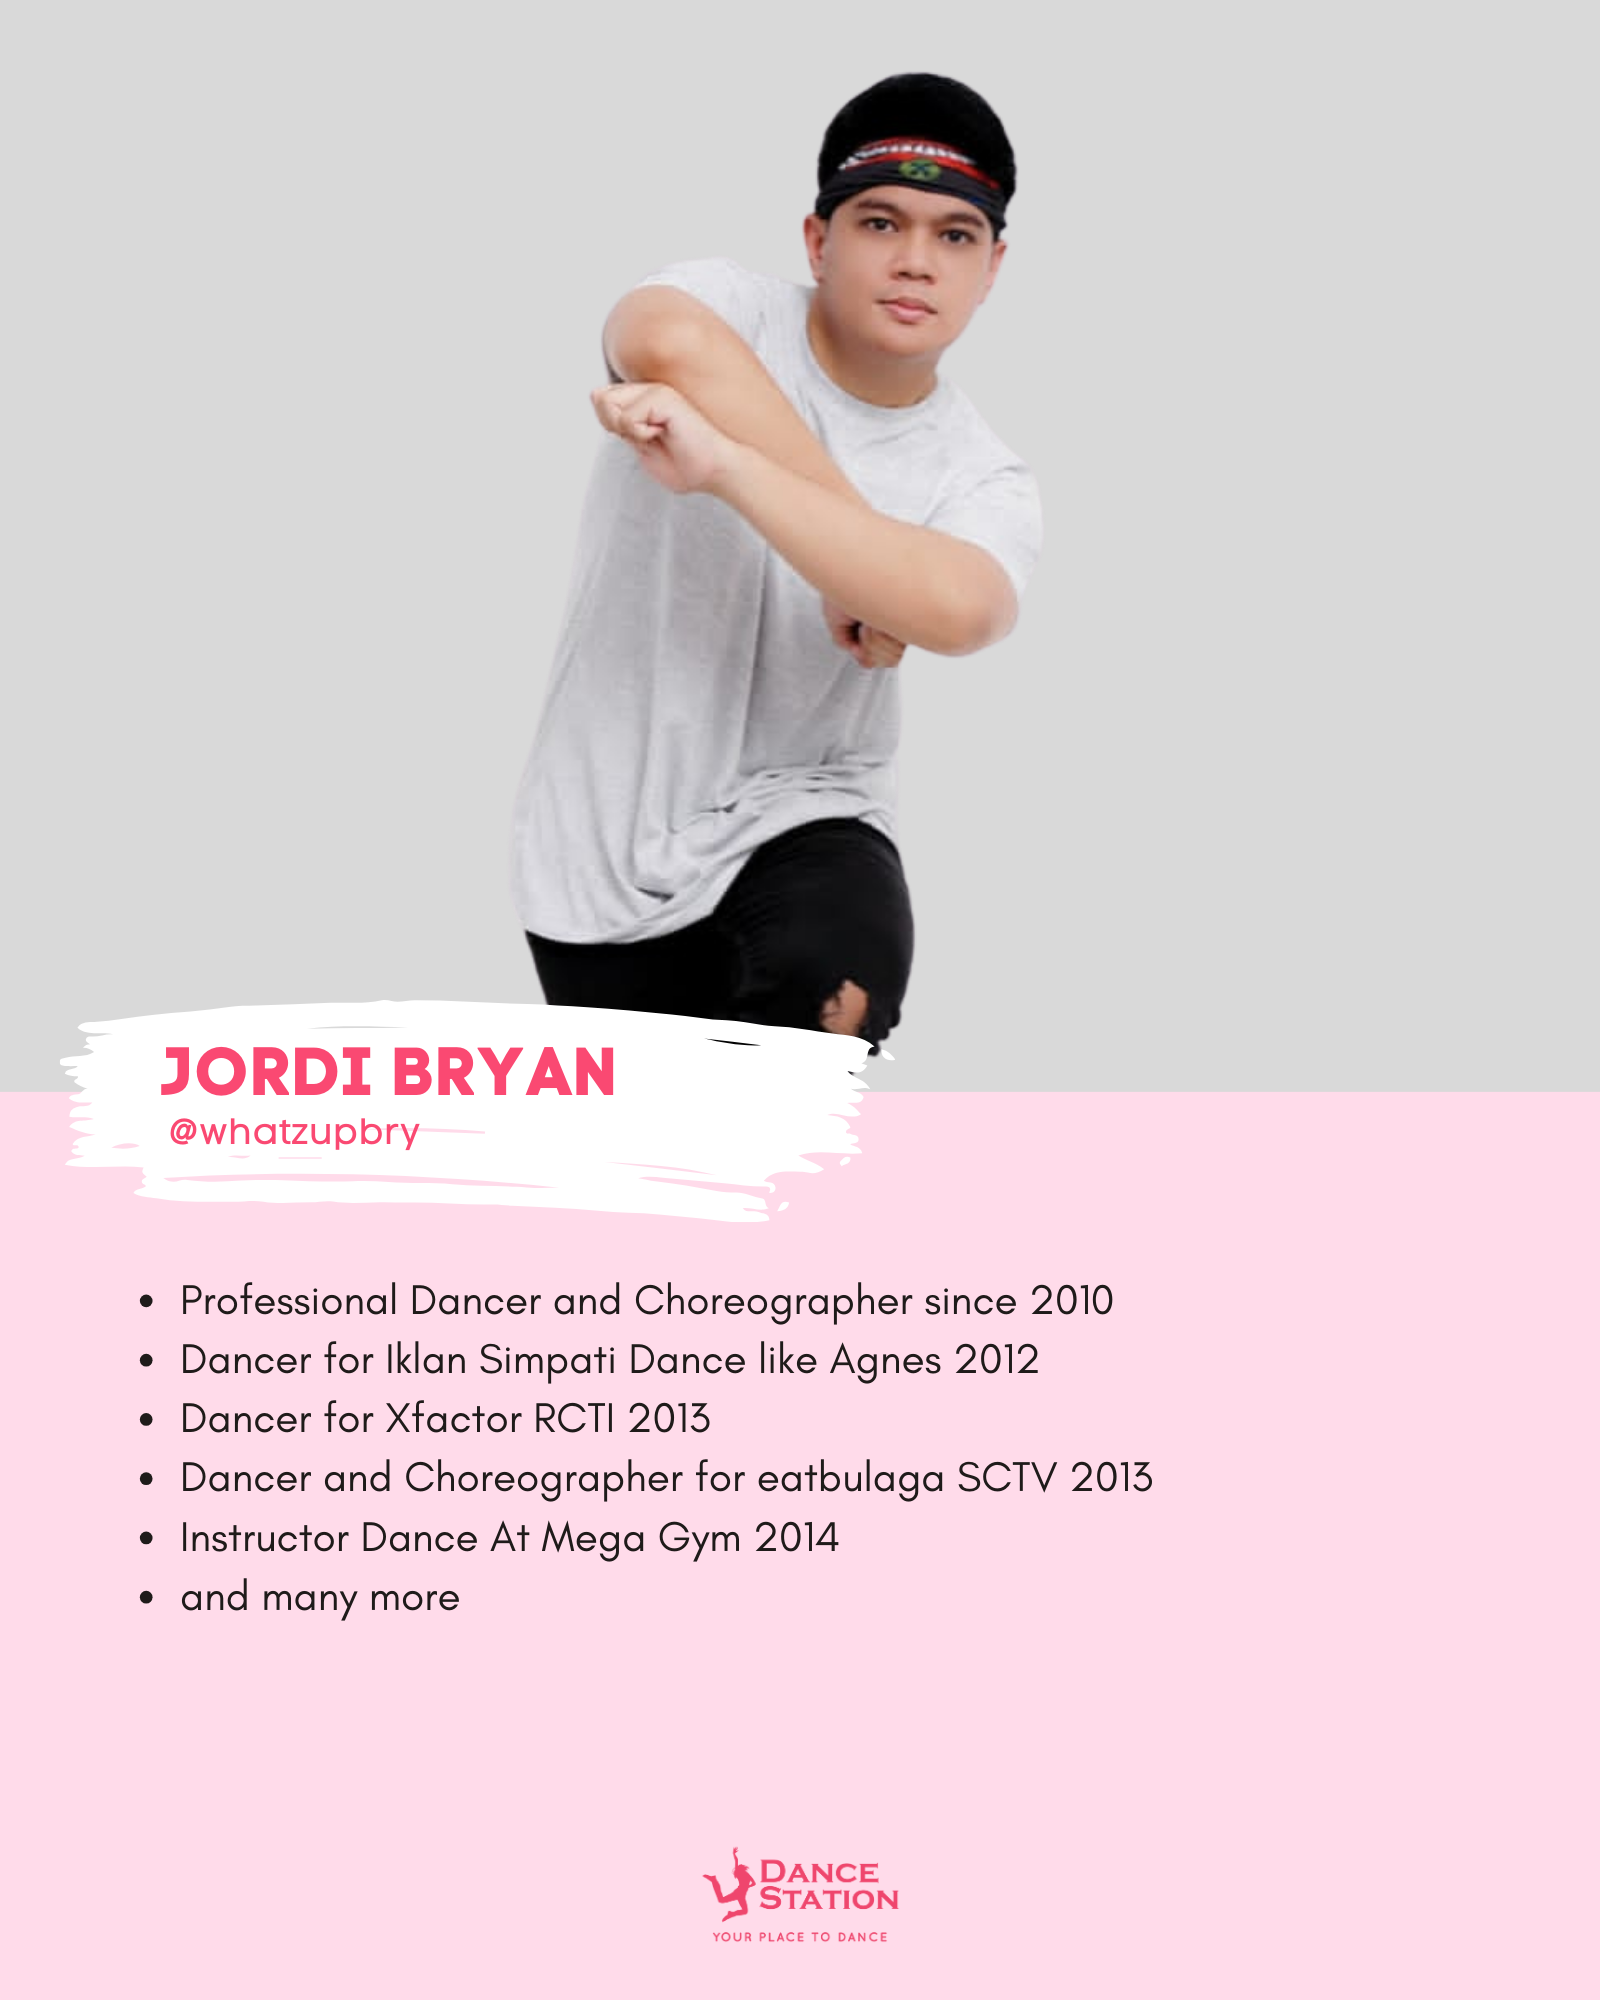 JORDI BRYAN (MR. Bryan)